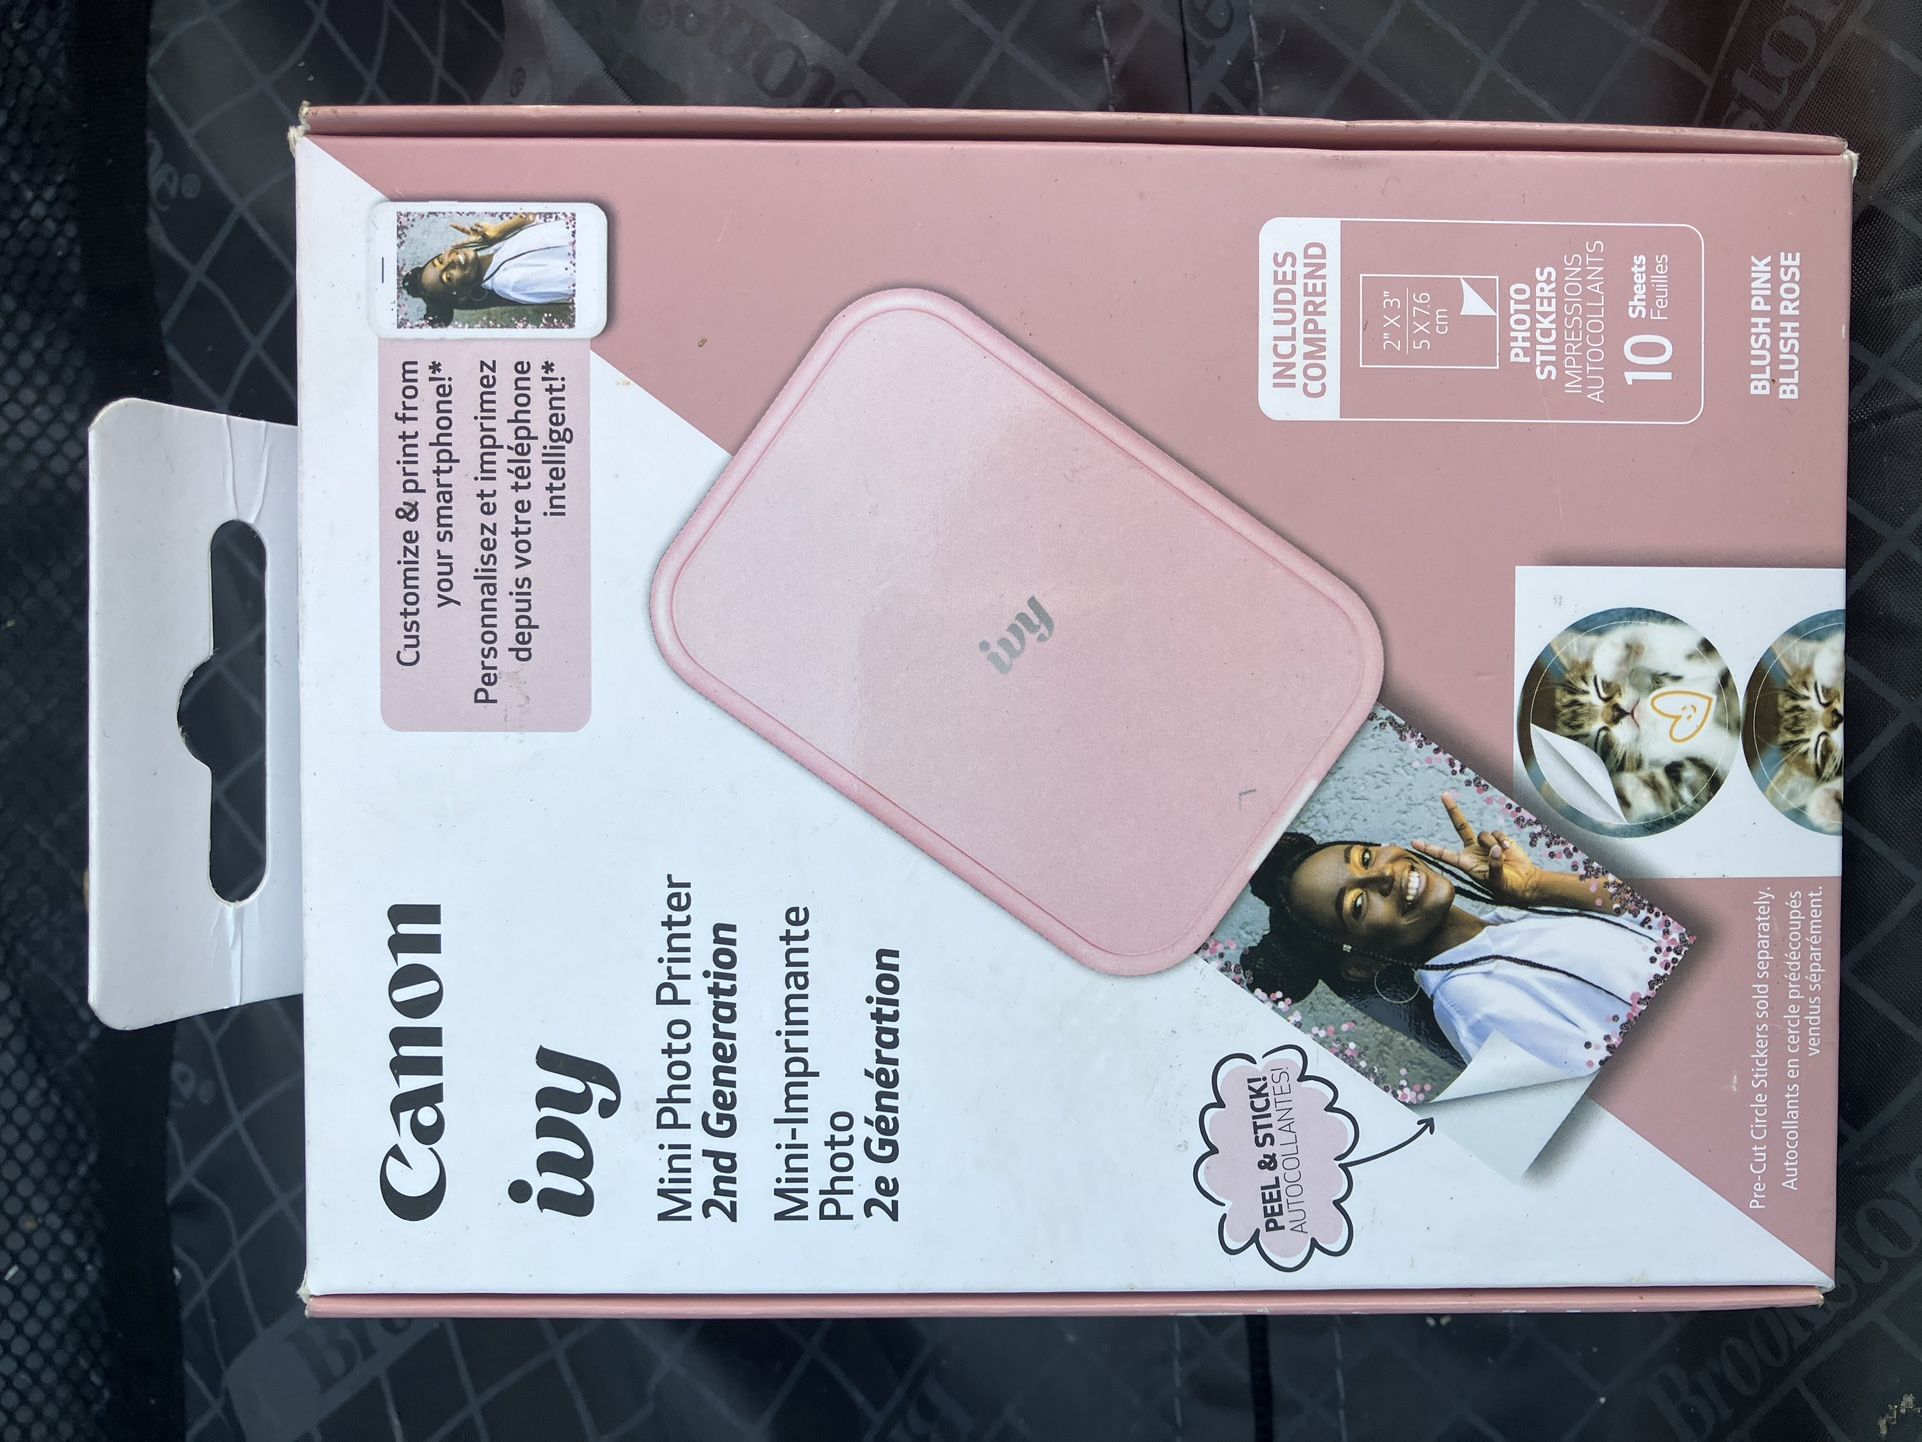 Canon - Ivy 2 Mini Photo Printer - Blush Pink